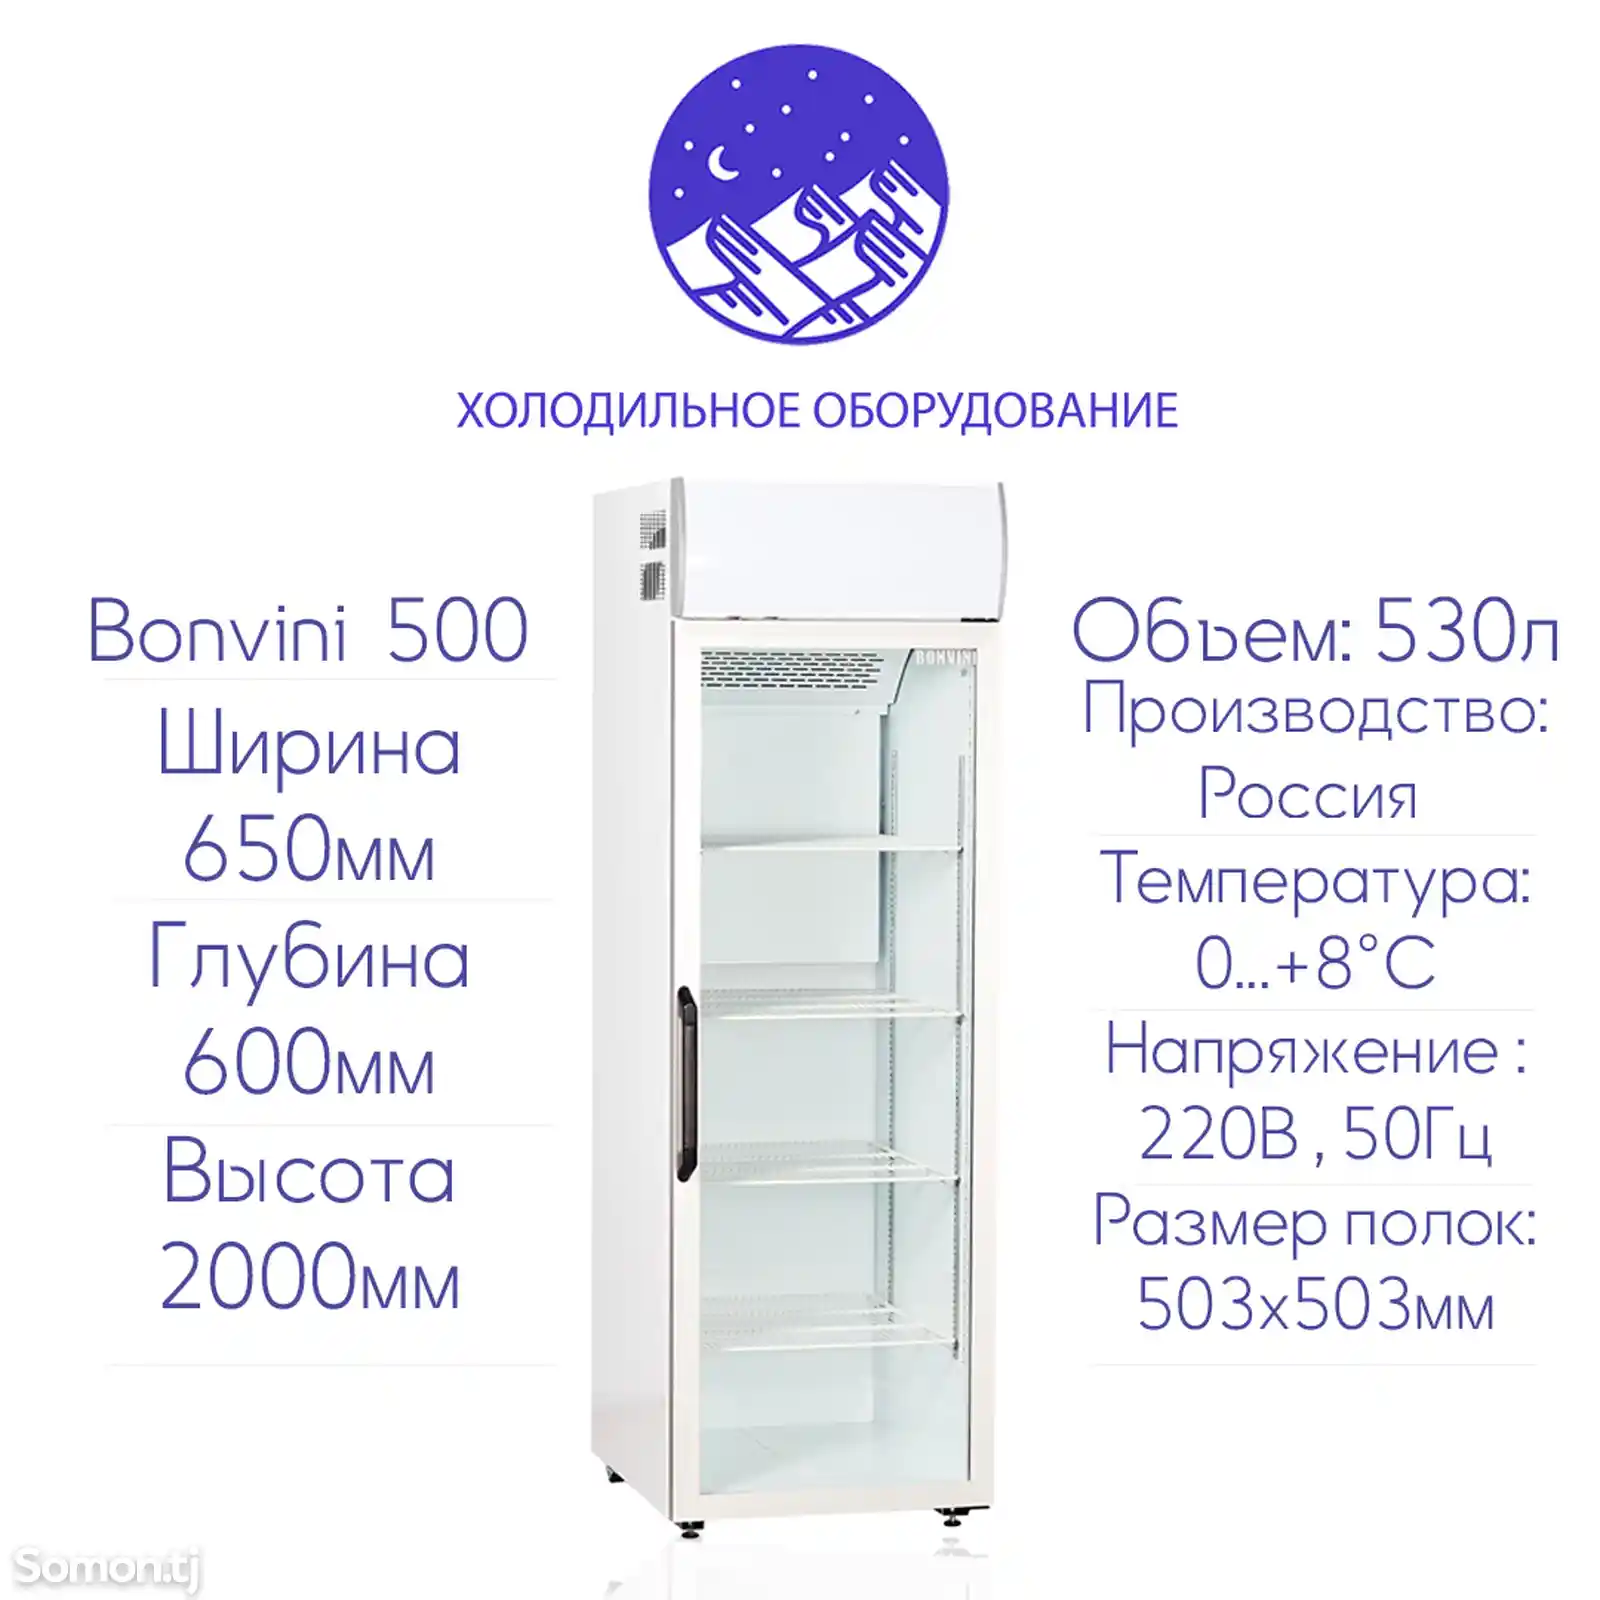 Холодильник витринный Bonvini 500-1